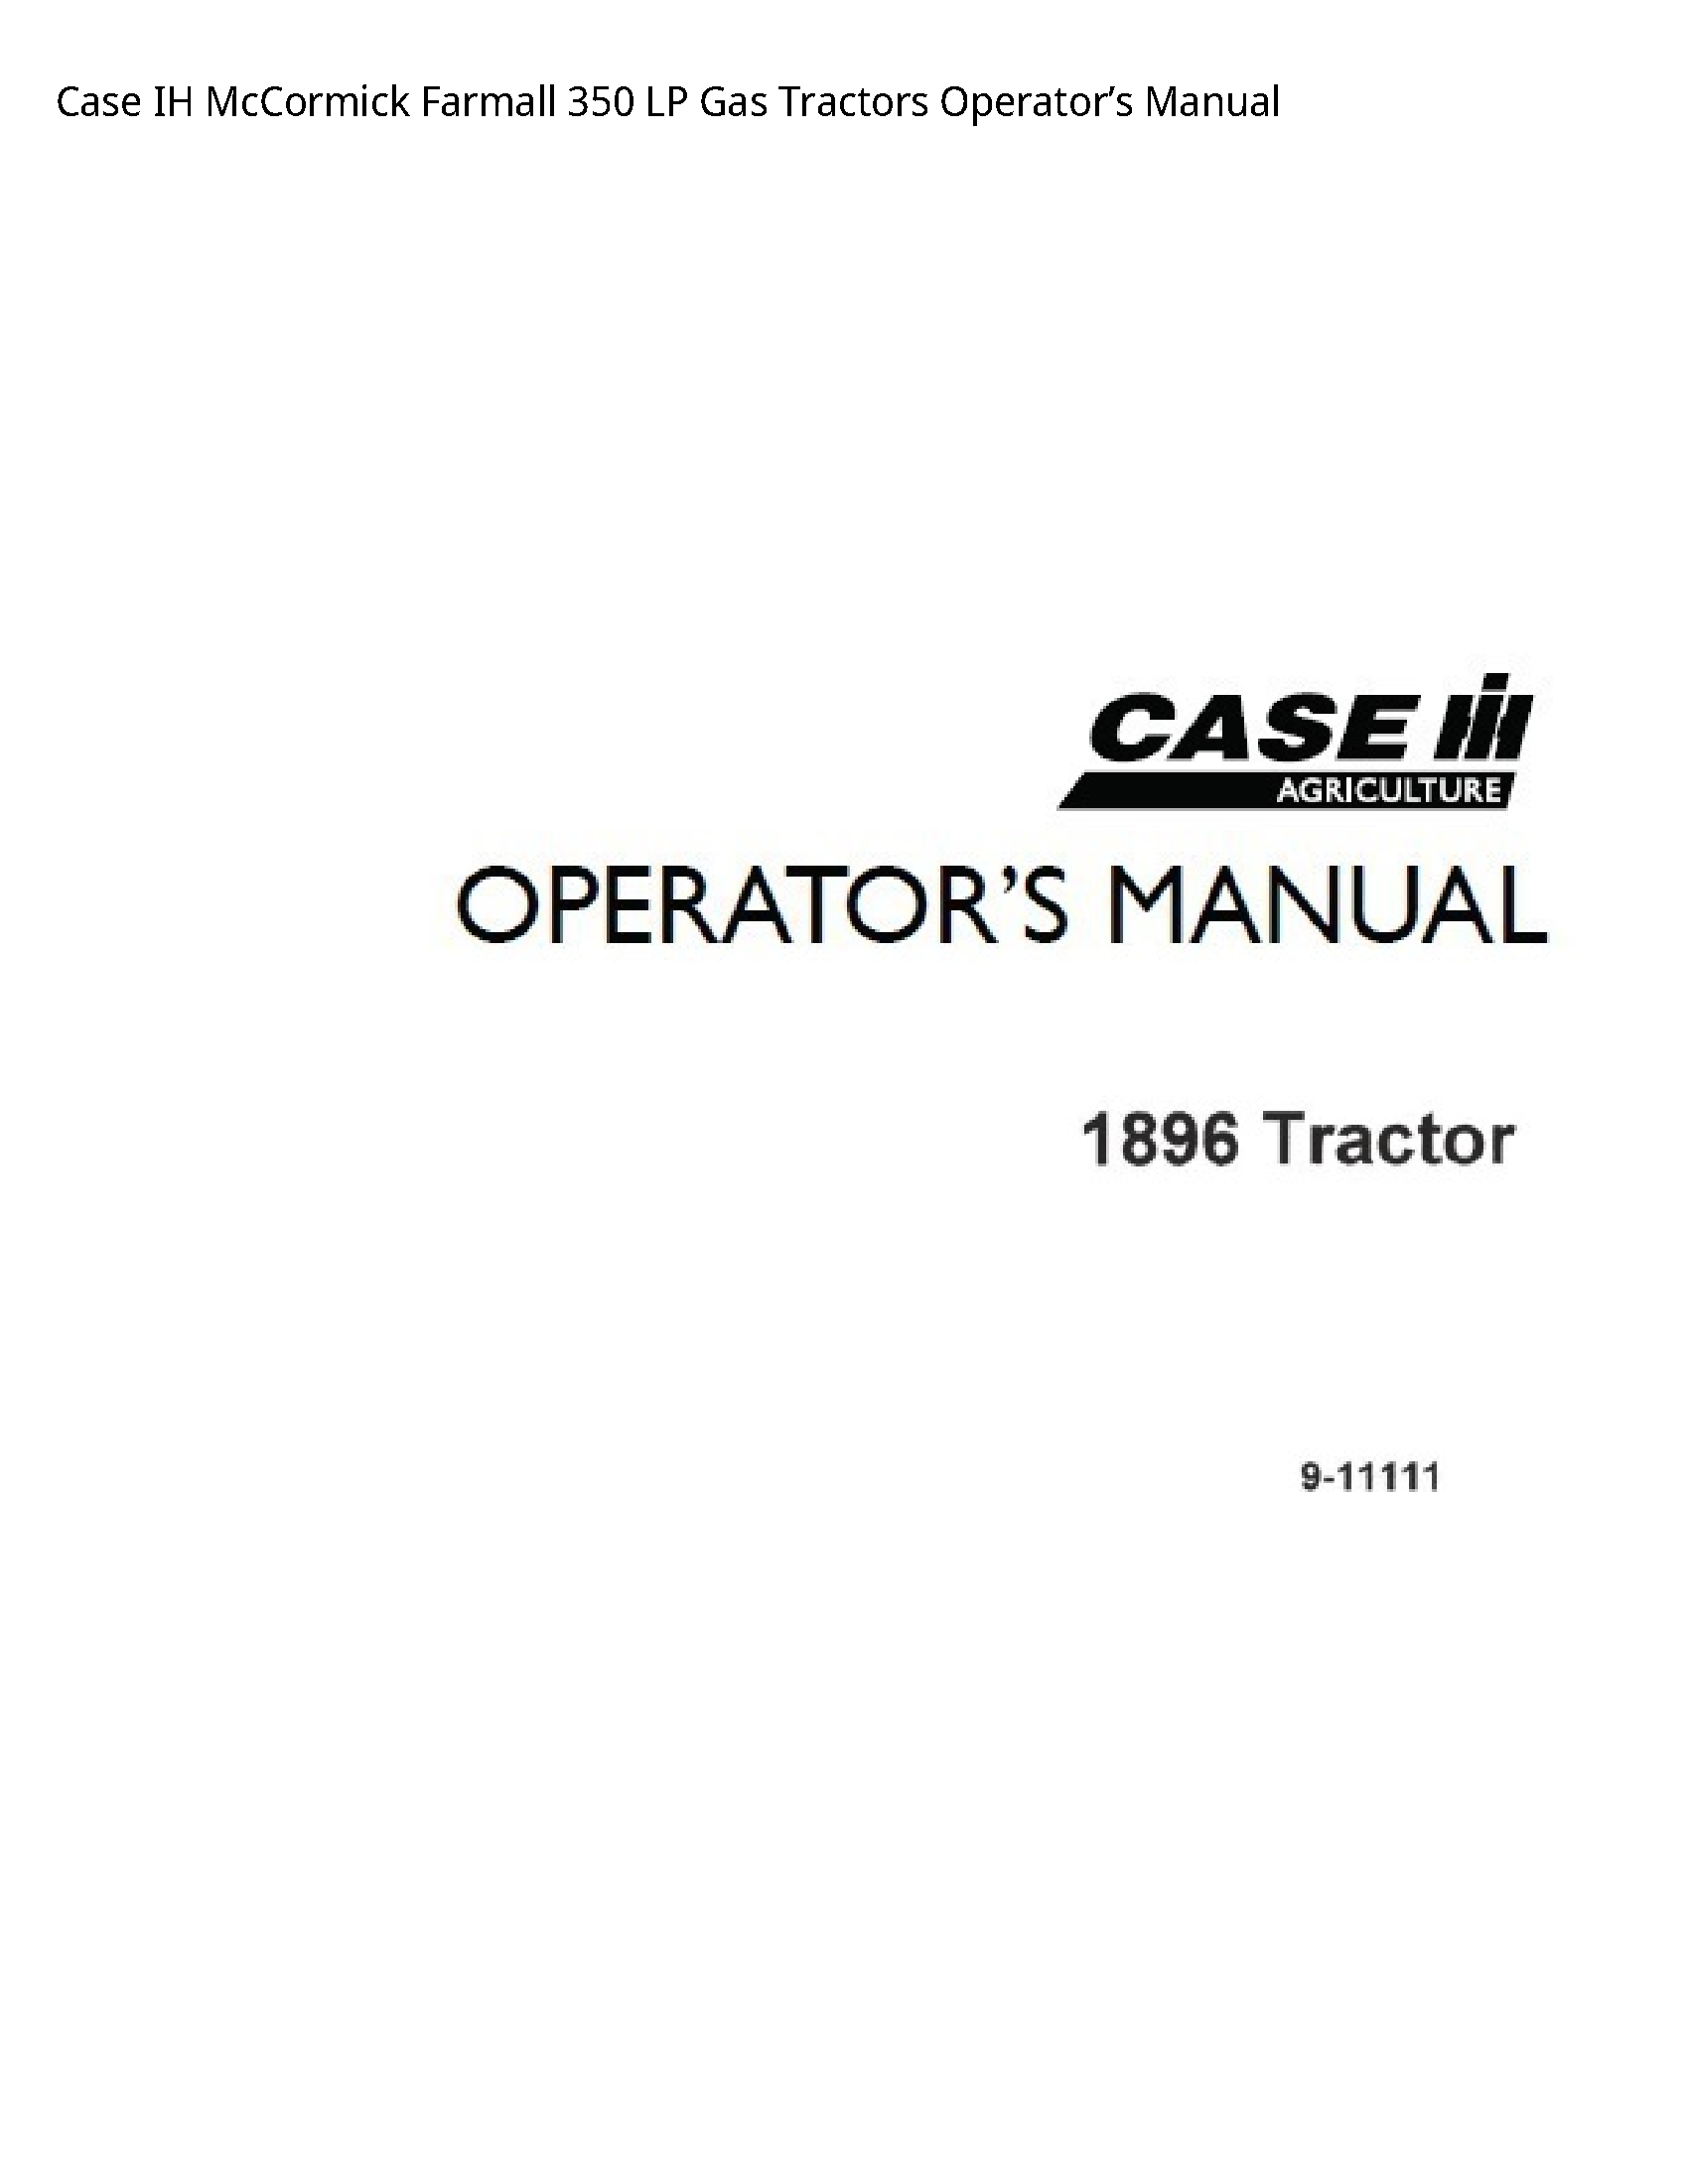 Case/Case IH 350 IH McCormick Farmall LP Gas Tractors Operator’s manual